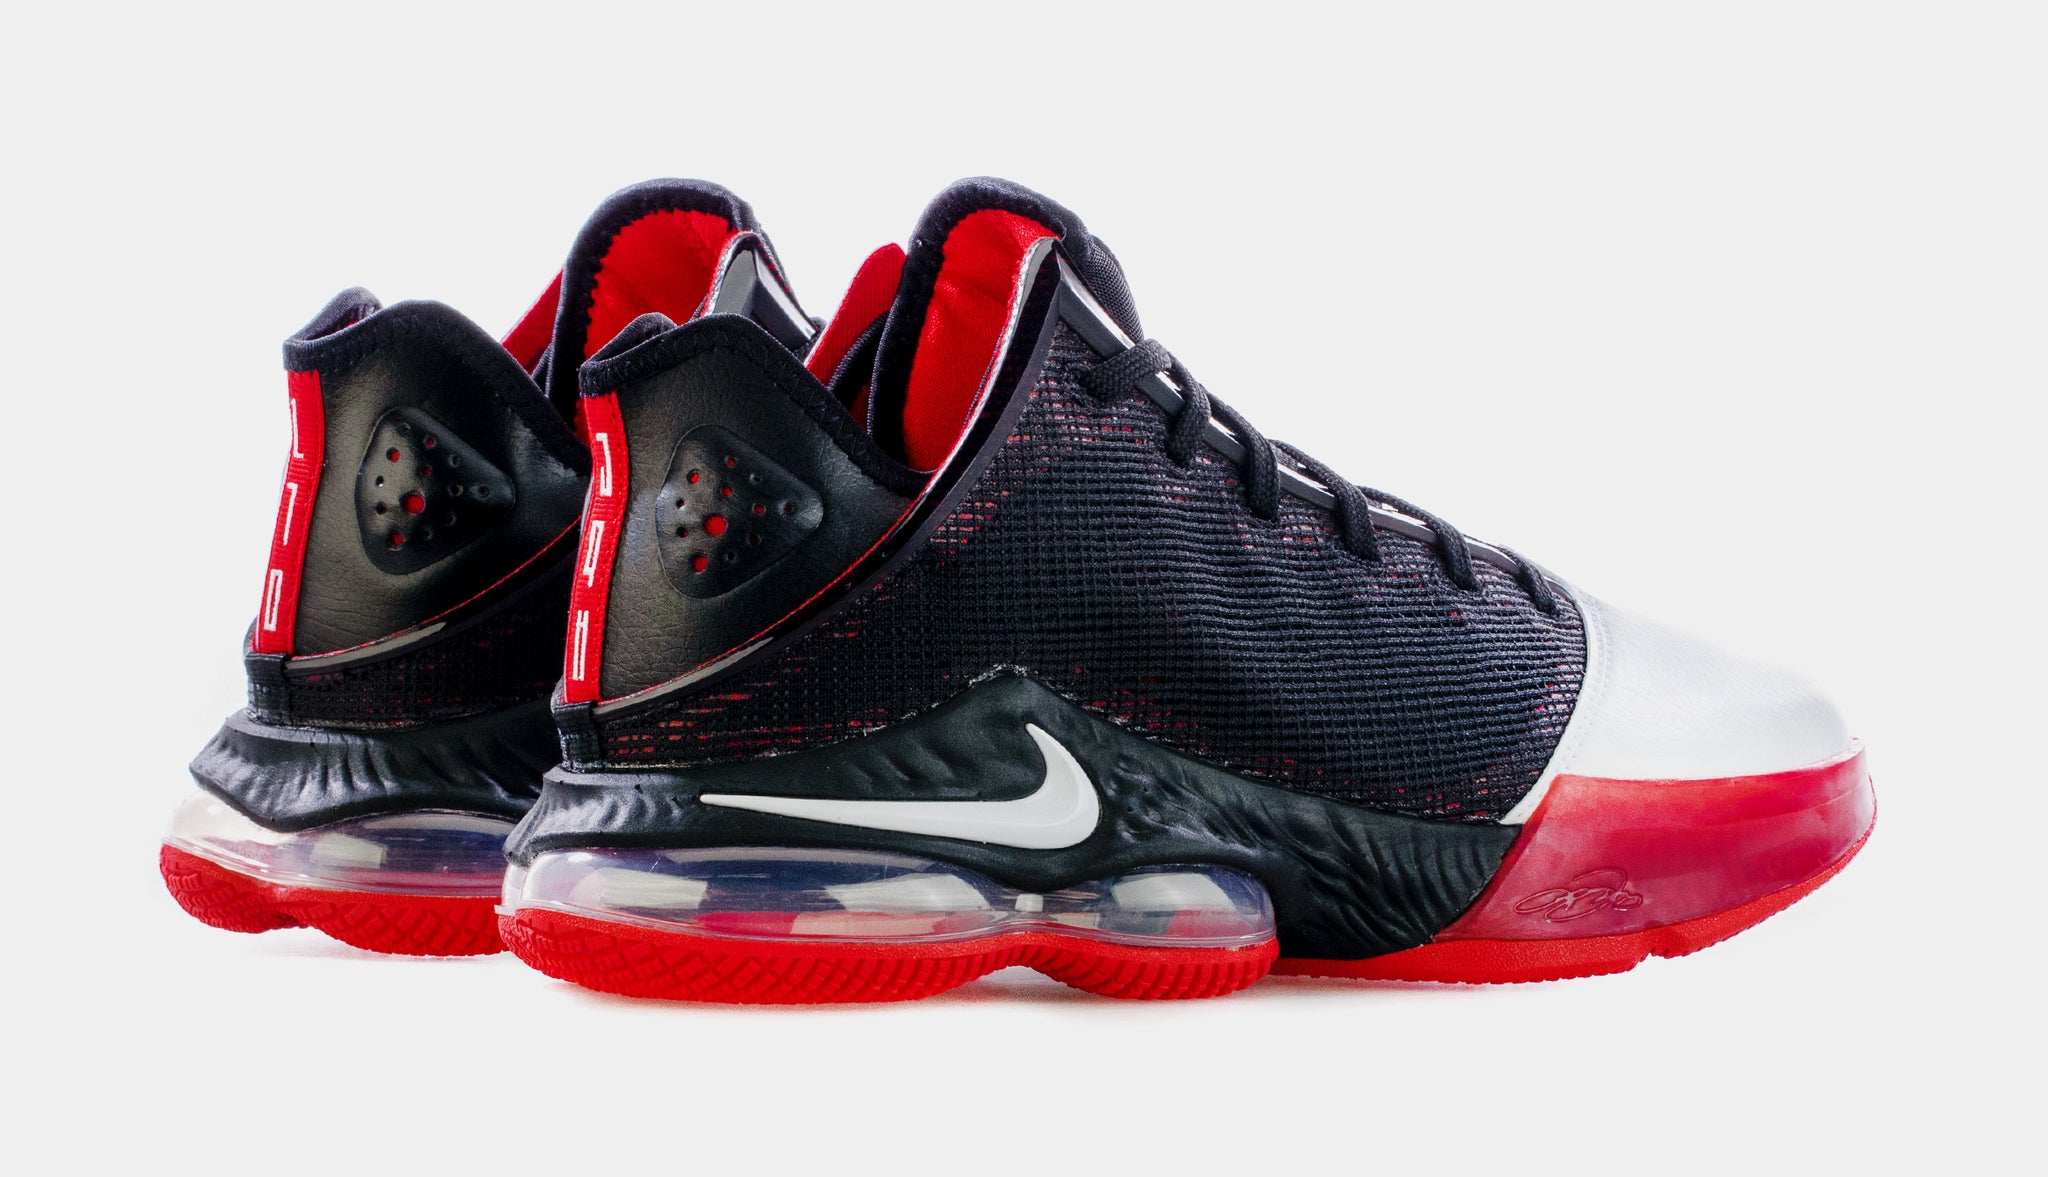 Nike Lebron XIX Low EP 19 Bred Black Red Men Basketball Shoes Sneaker  DH1271-001 